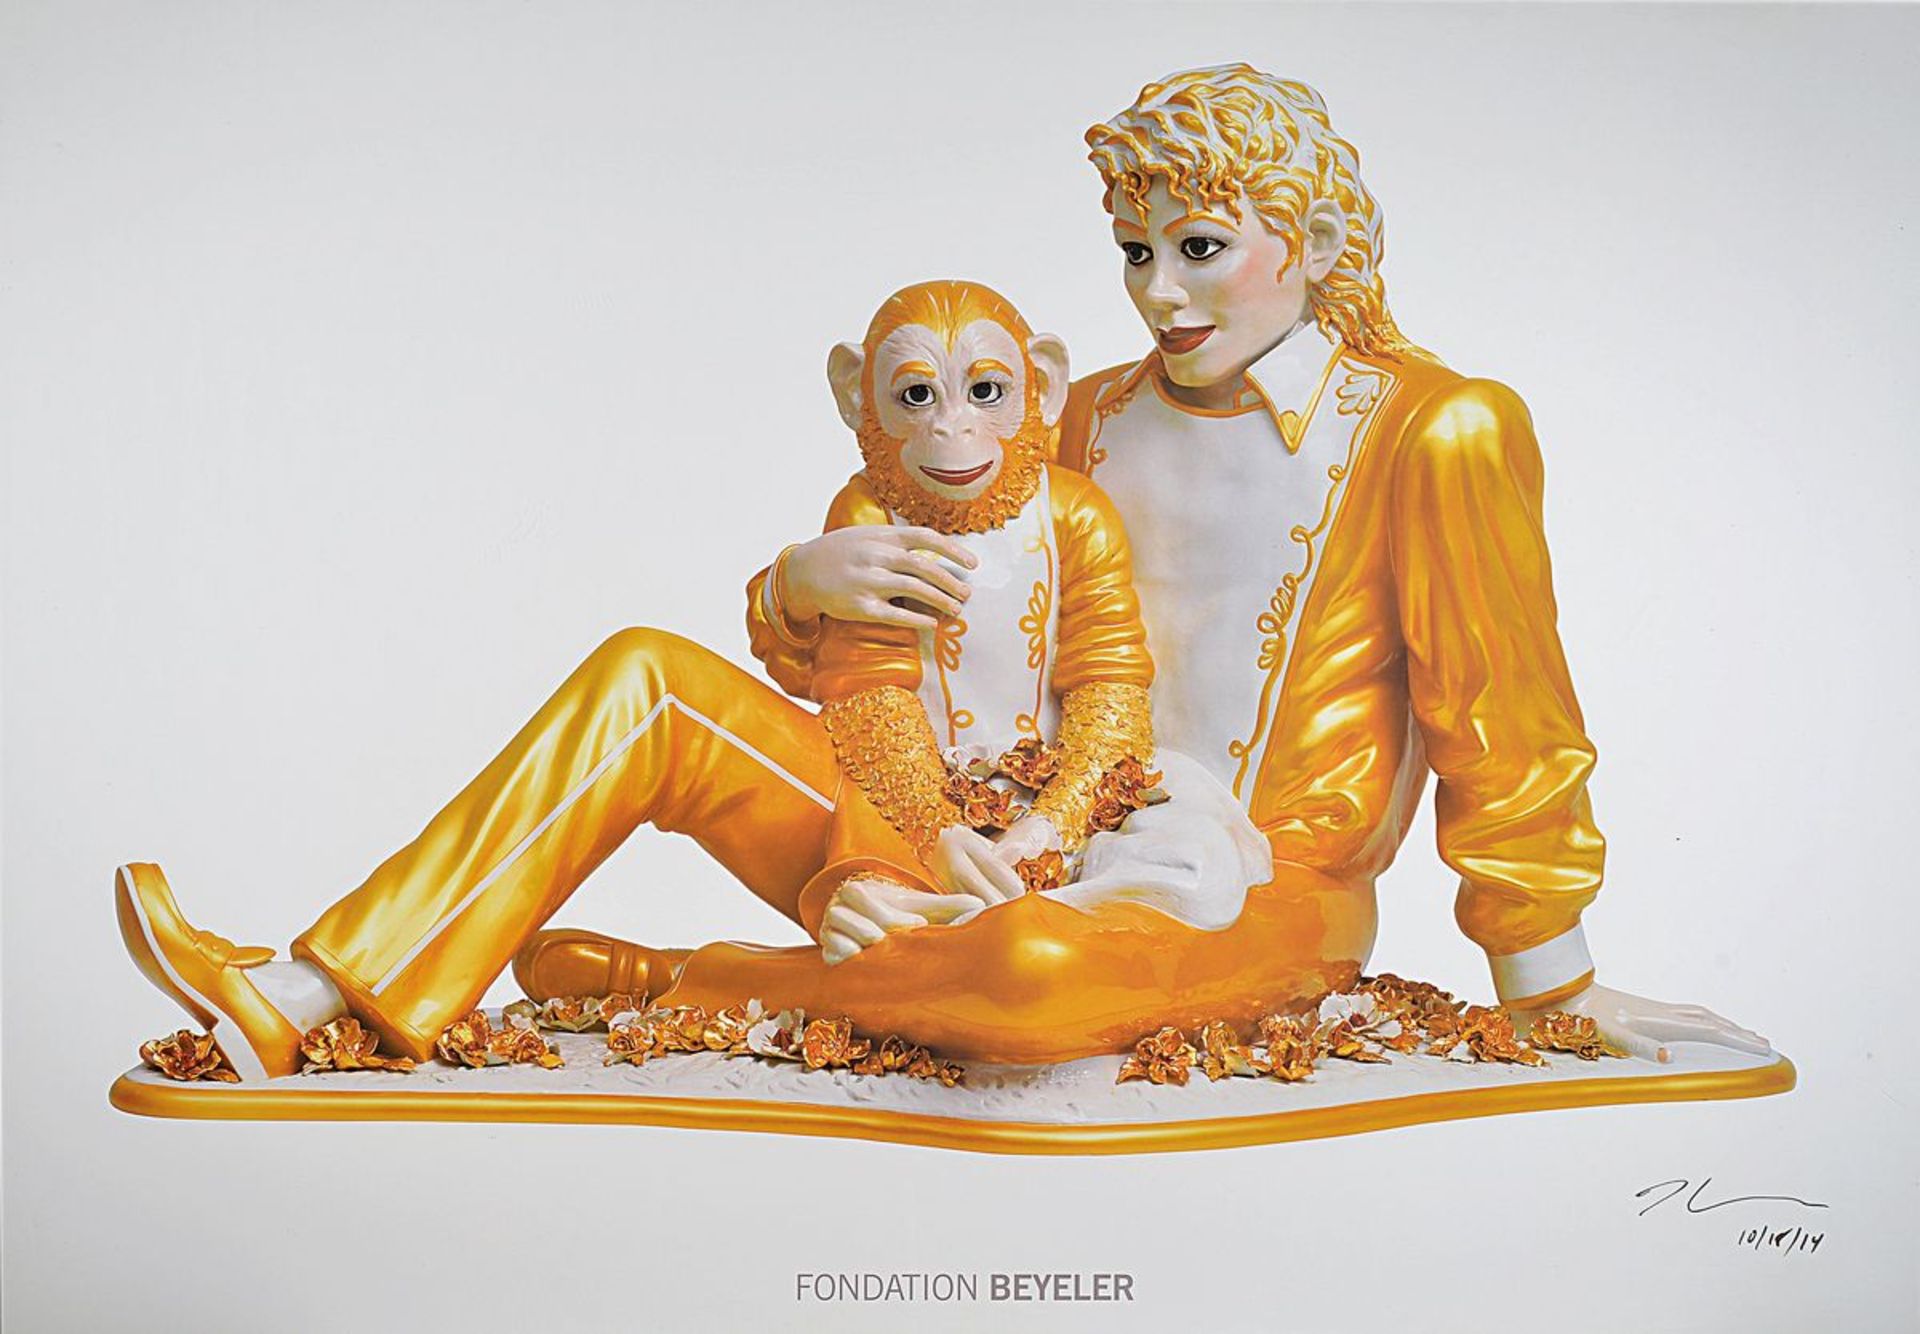 Jeff Koons, born 1955, # "Michael Jackson and Bubbles #", Fondation Beyeler, offset lithograph,